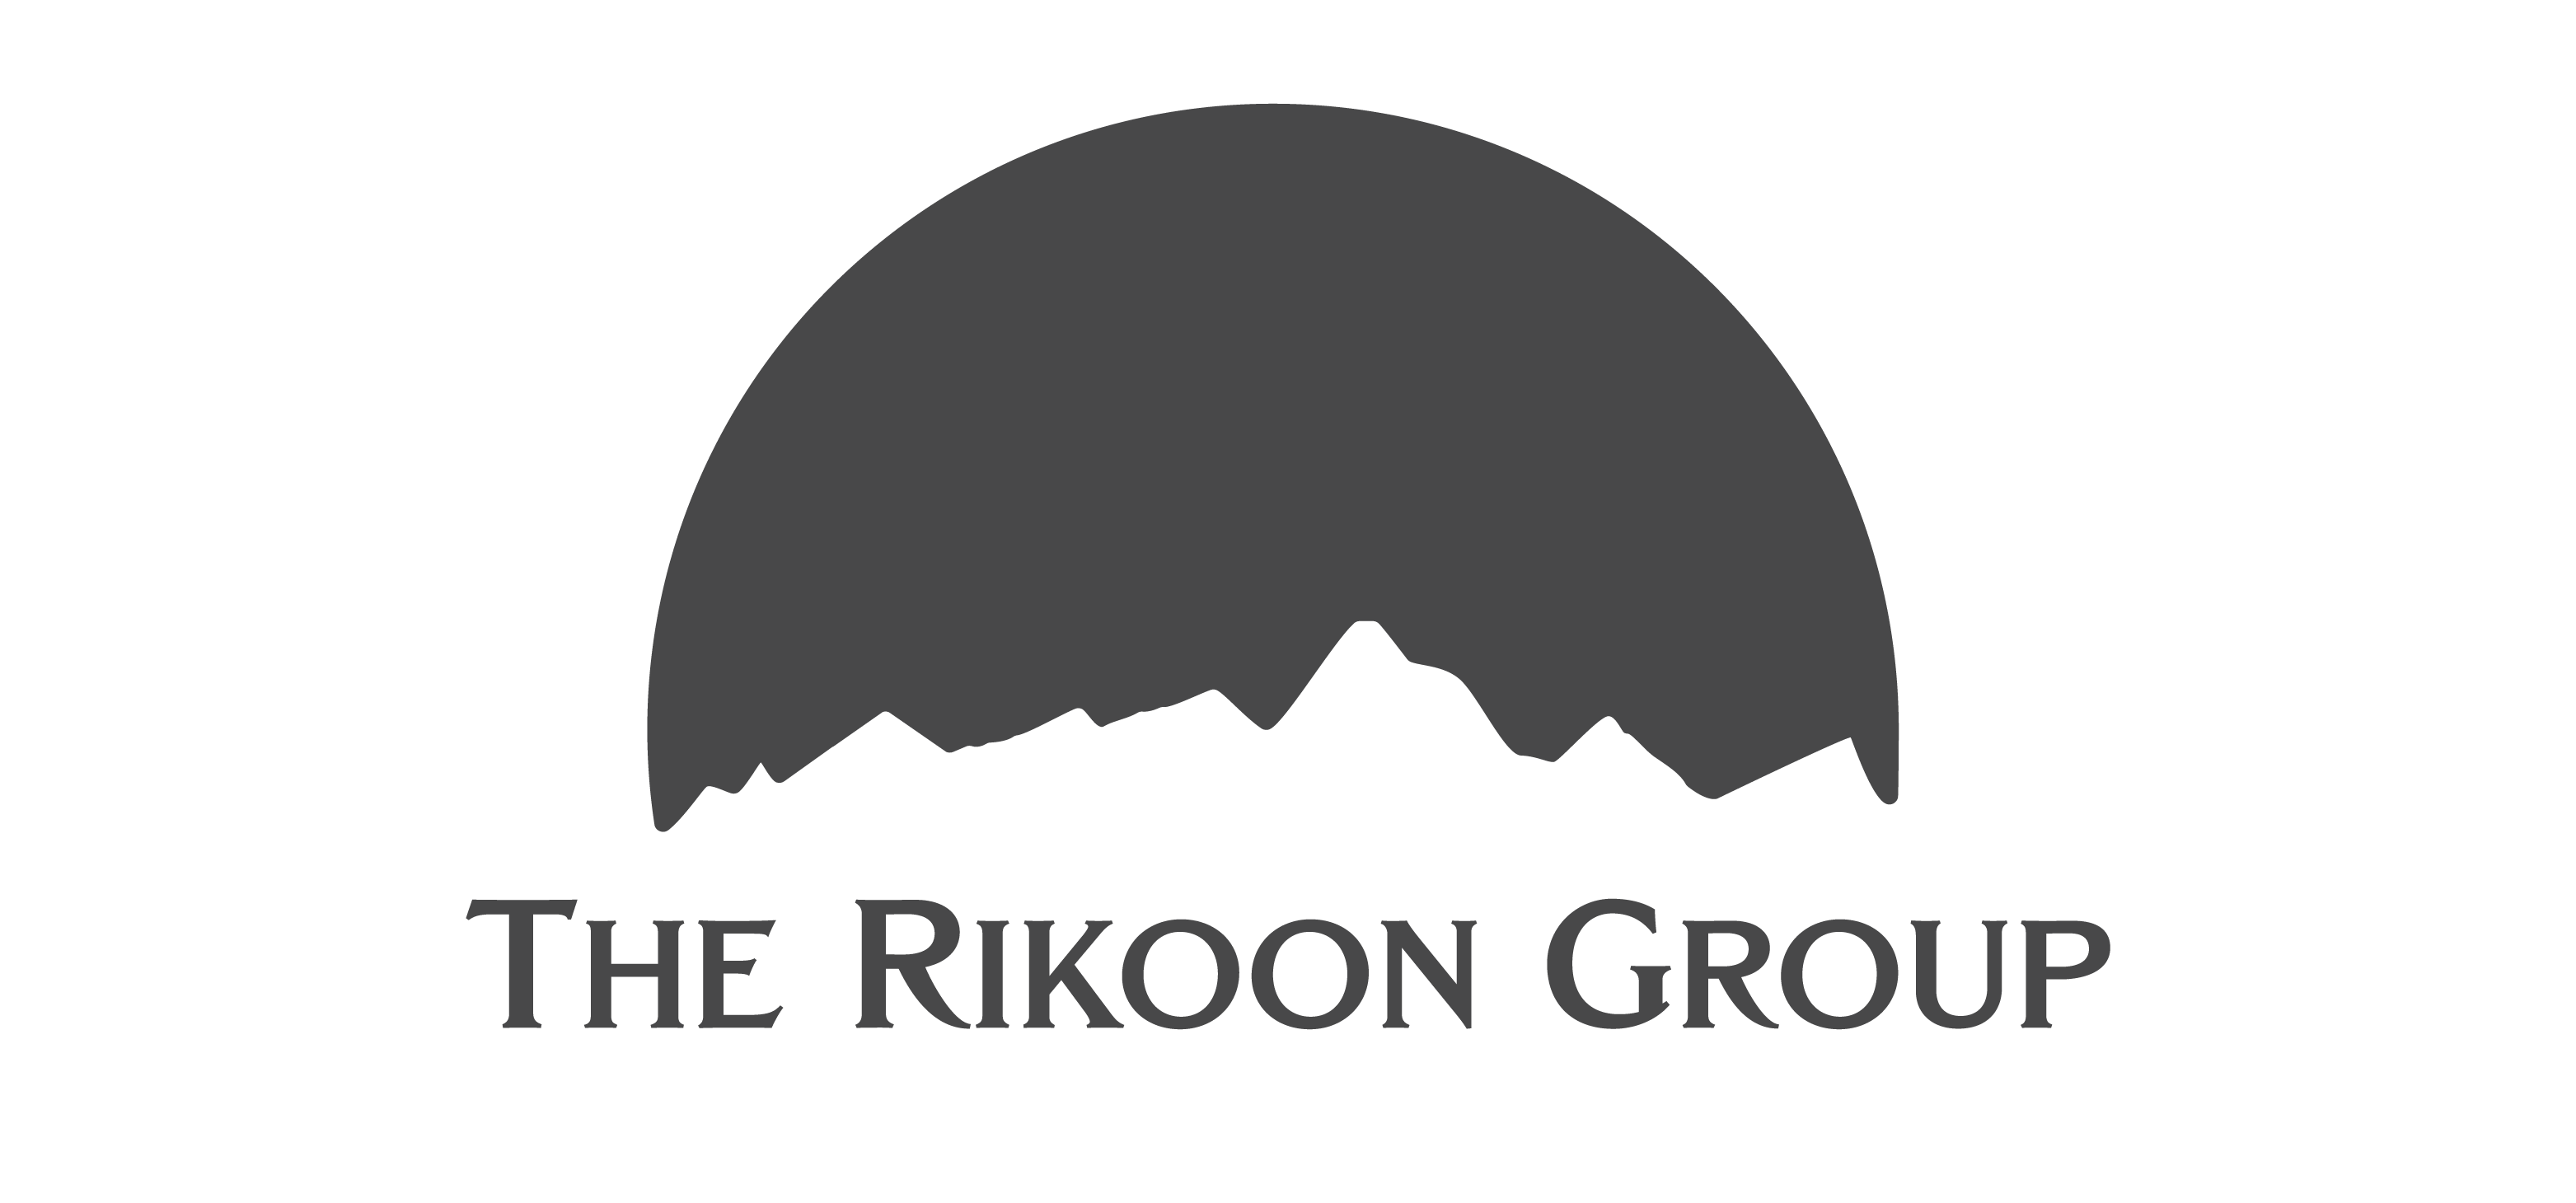 rikoon financial advisory group footer logo